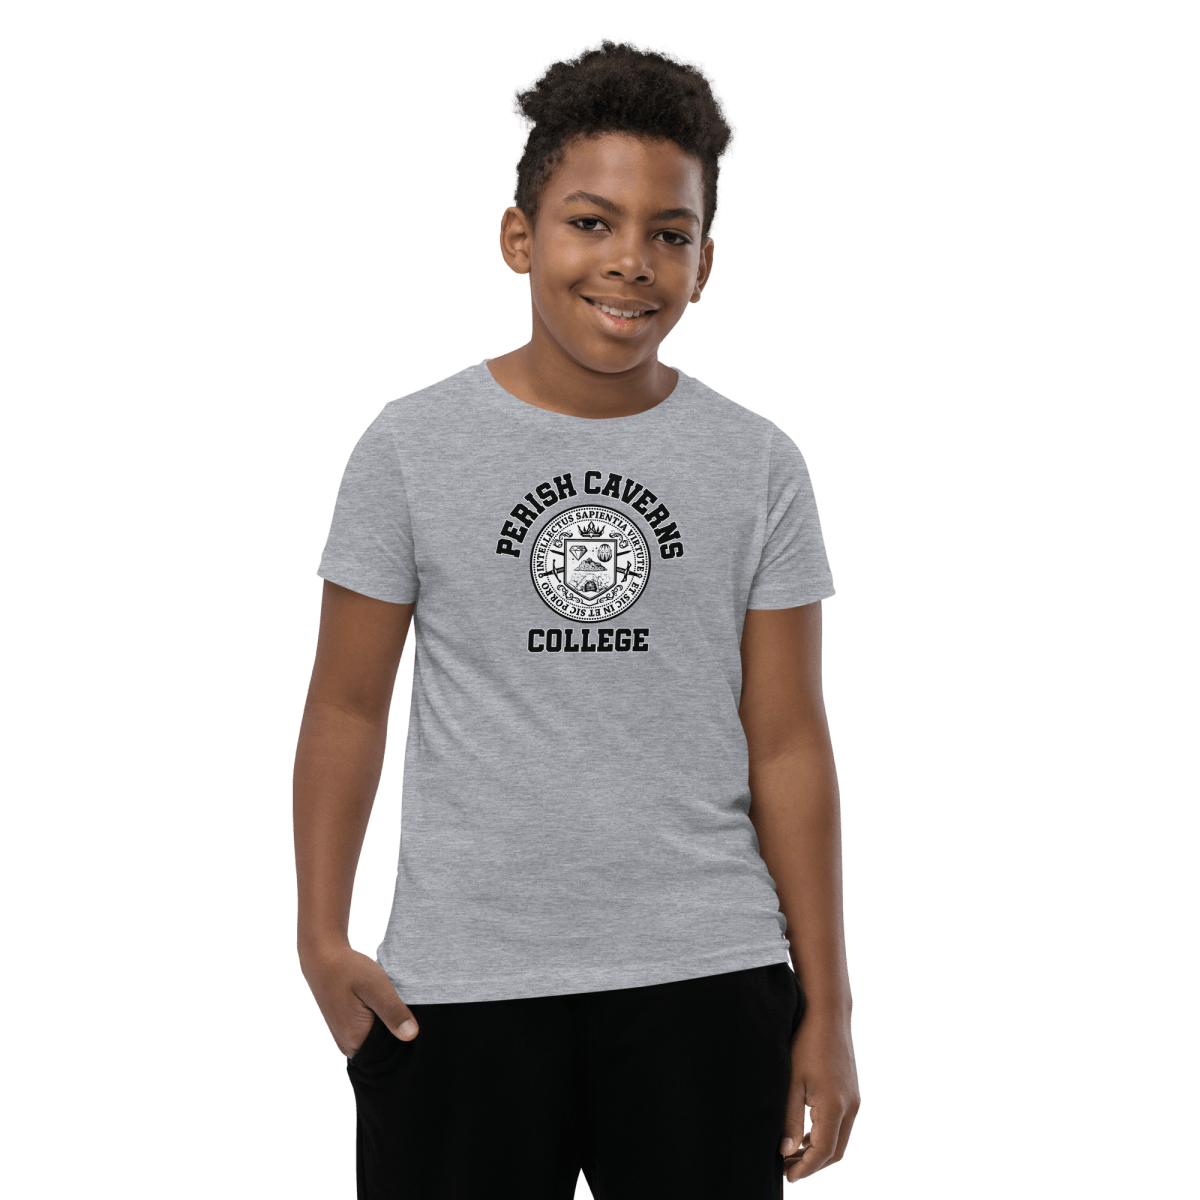 Perish Caverns College Crest youth t-shirt - RG Halleck